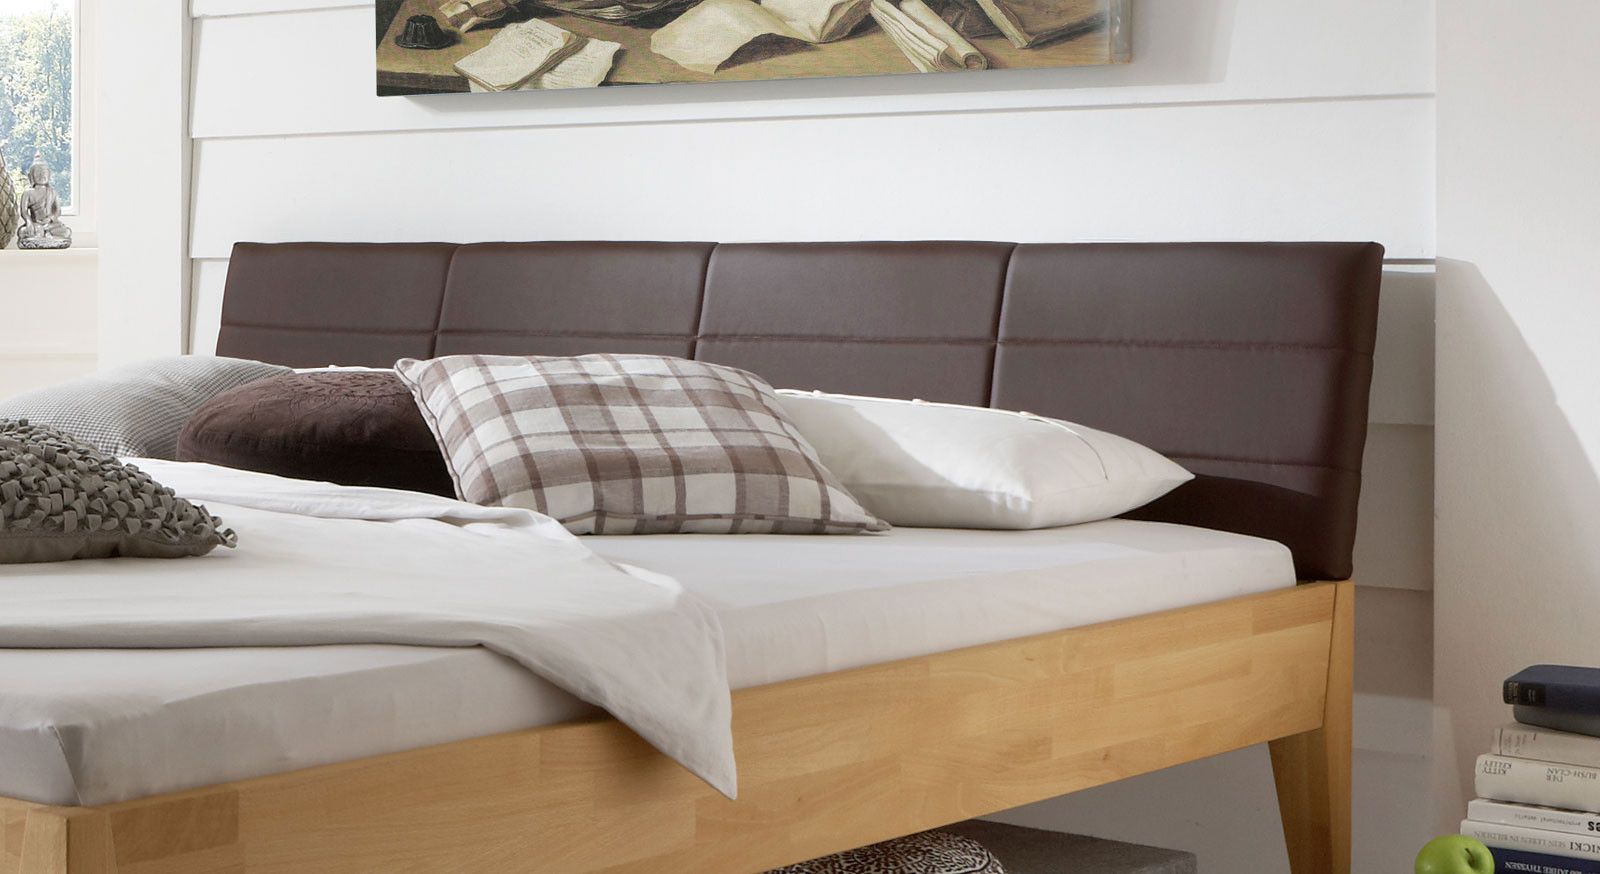 Bett Mit Gepolstertem Kopfteil
 Holzbett aus massiver Buche in z B 160x200 cm Leonardo